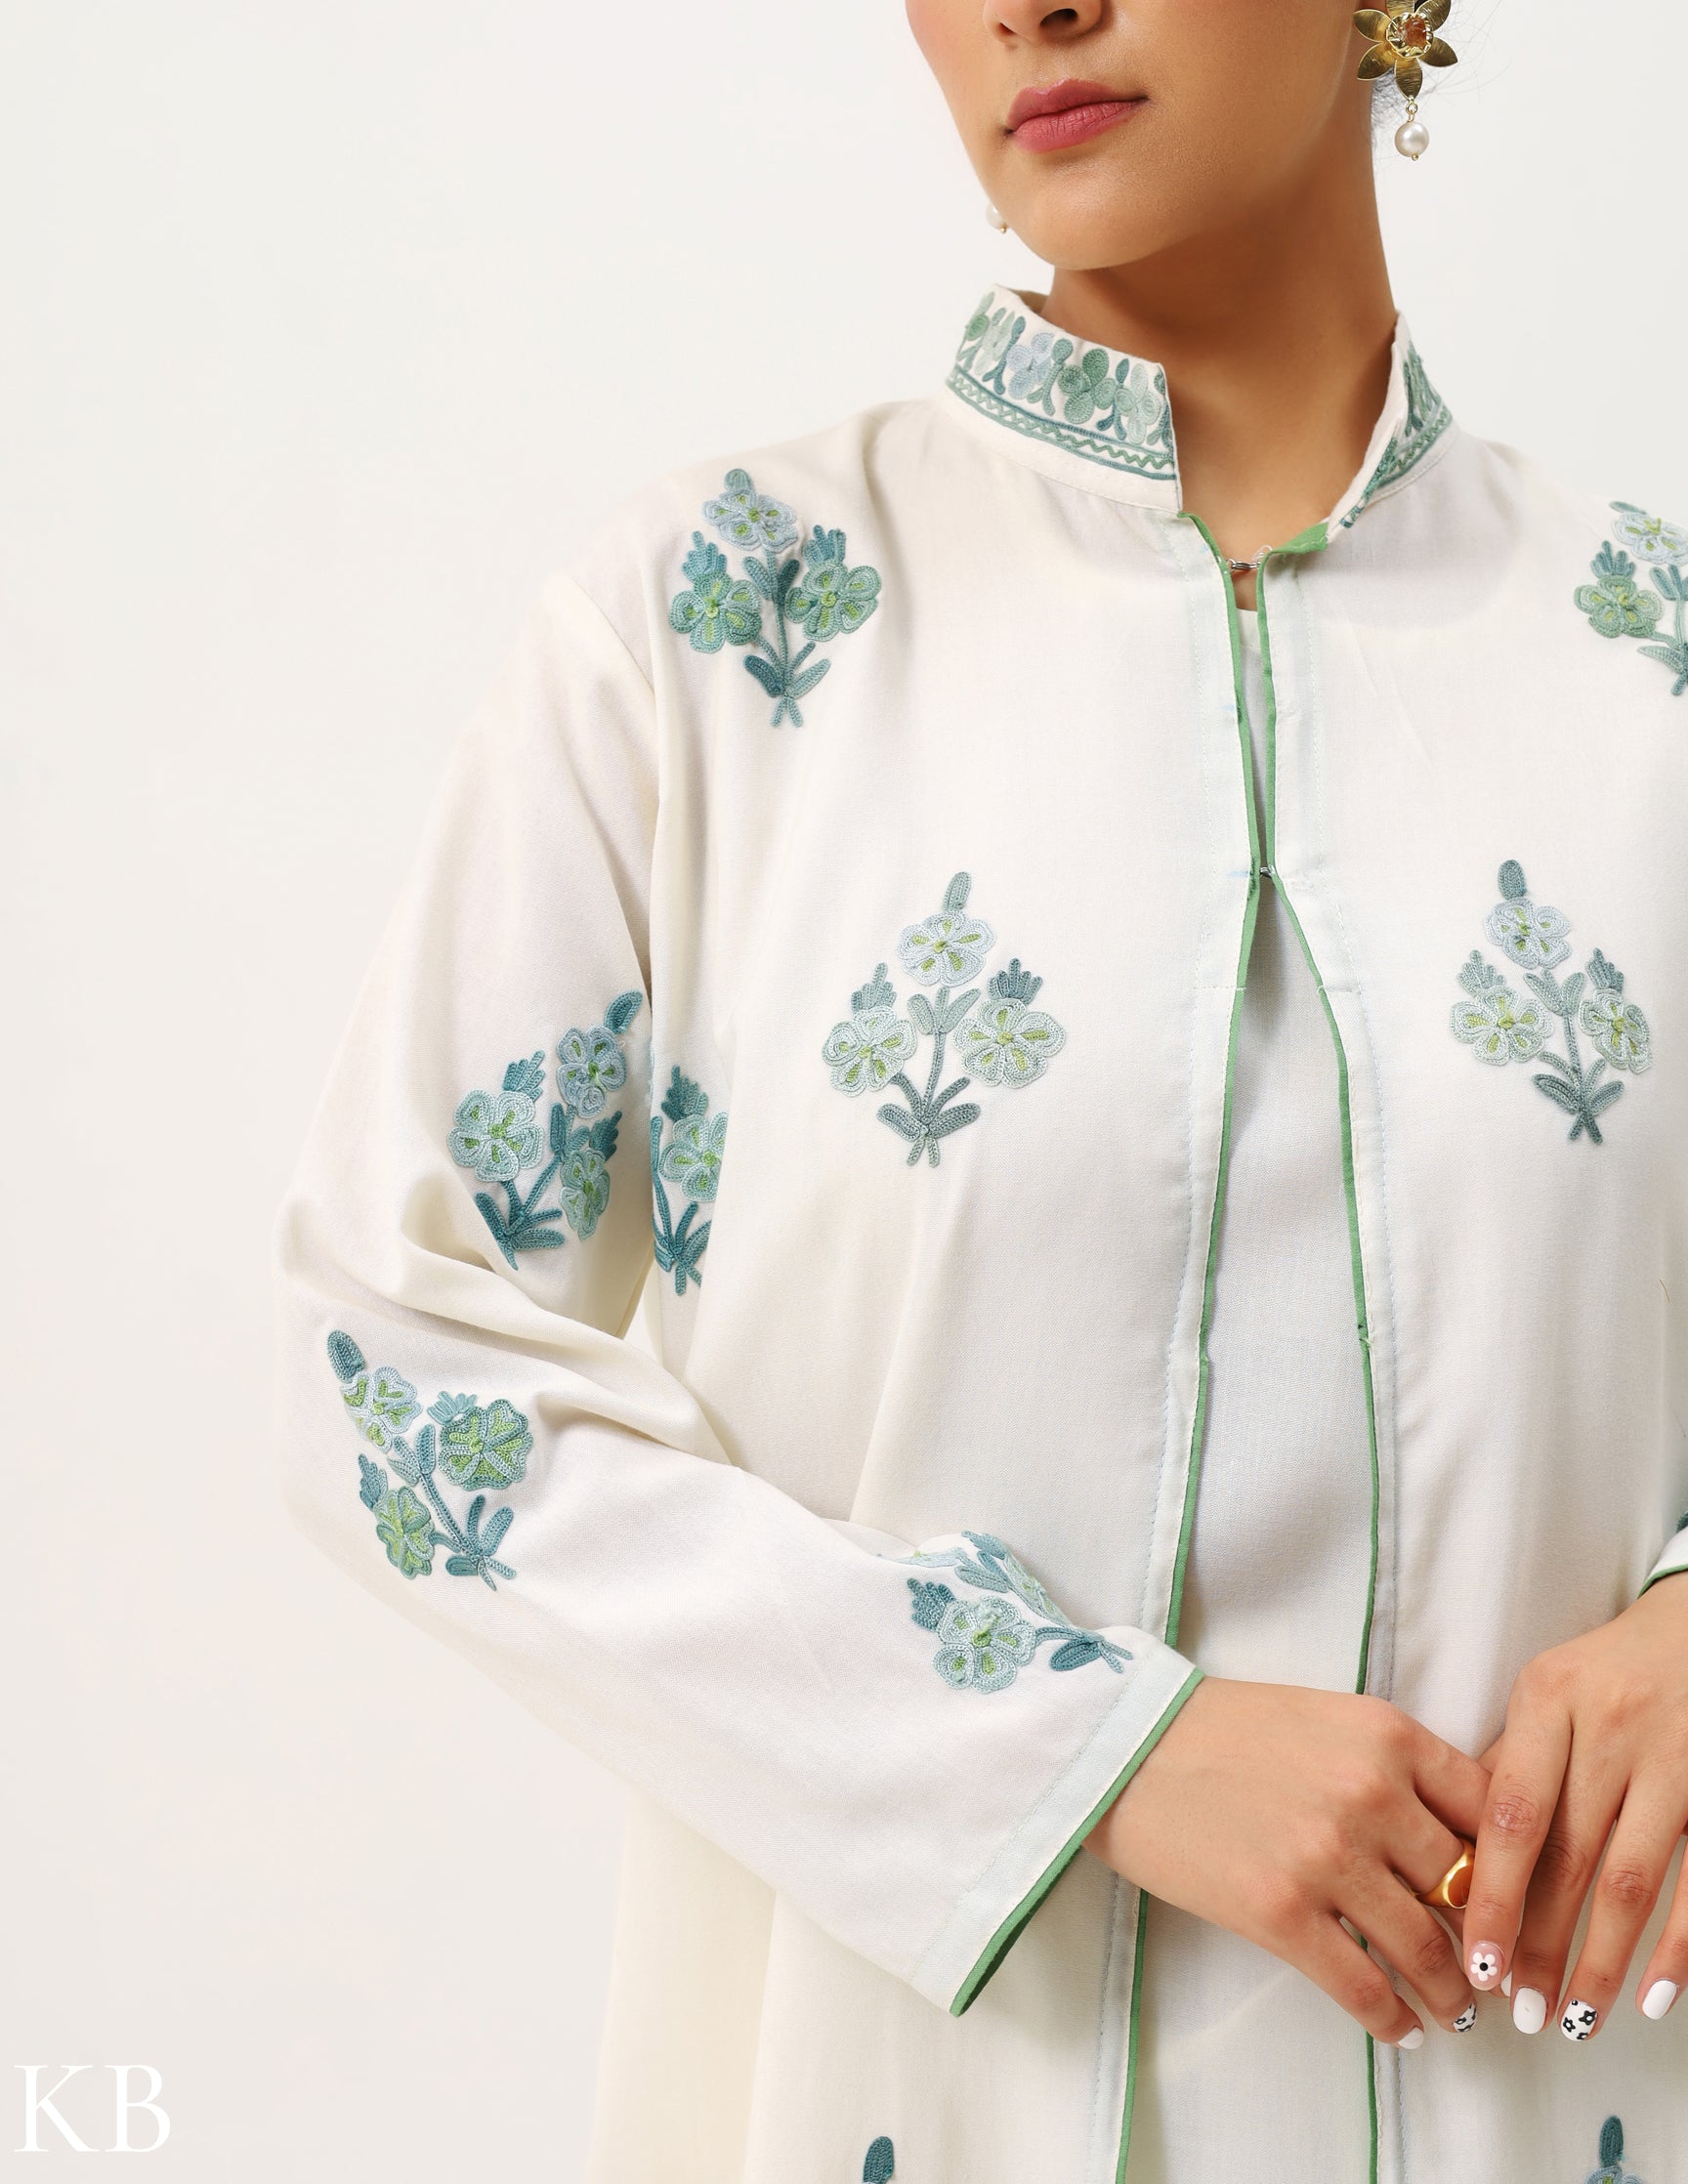 Creamy White Embroidered Jacket Co-ord Set - Kashmir Box